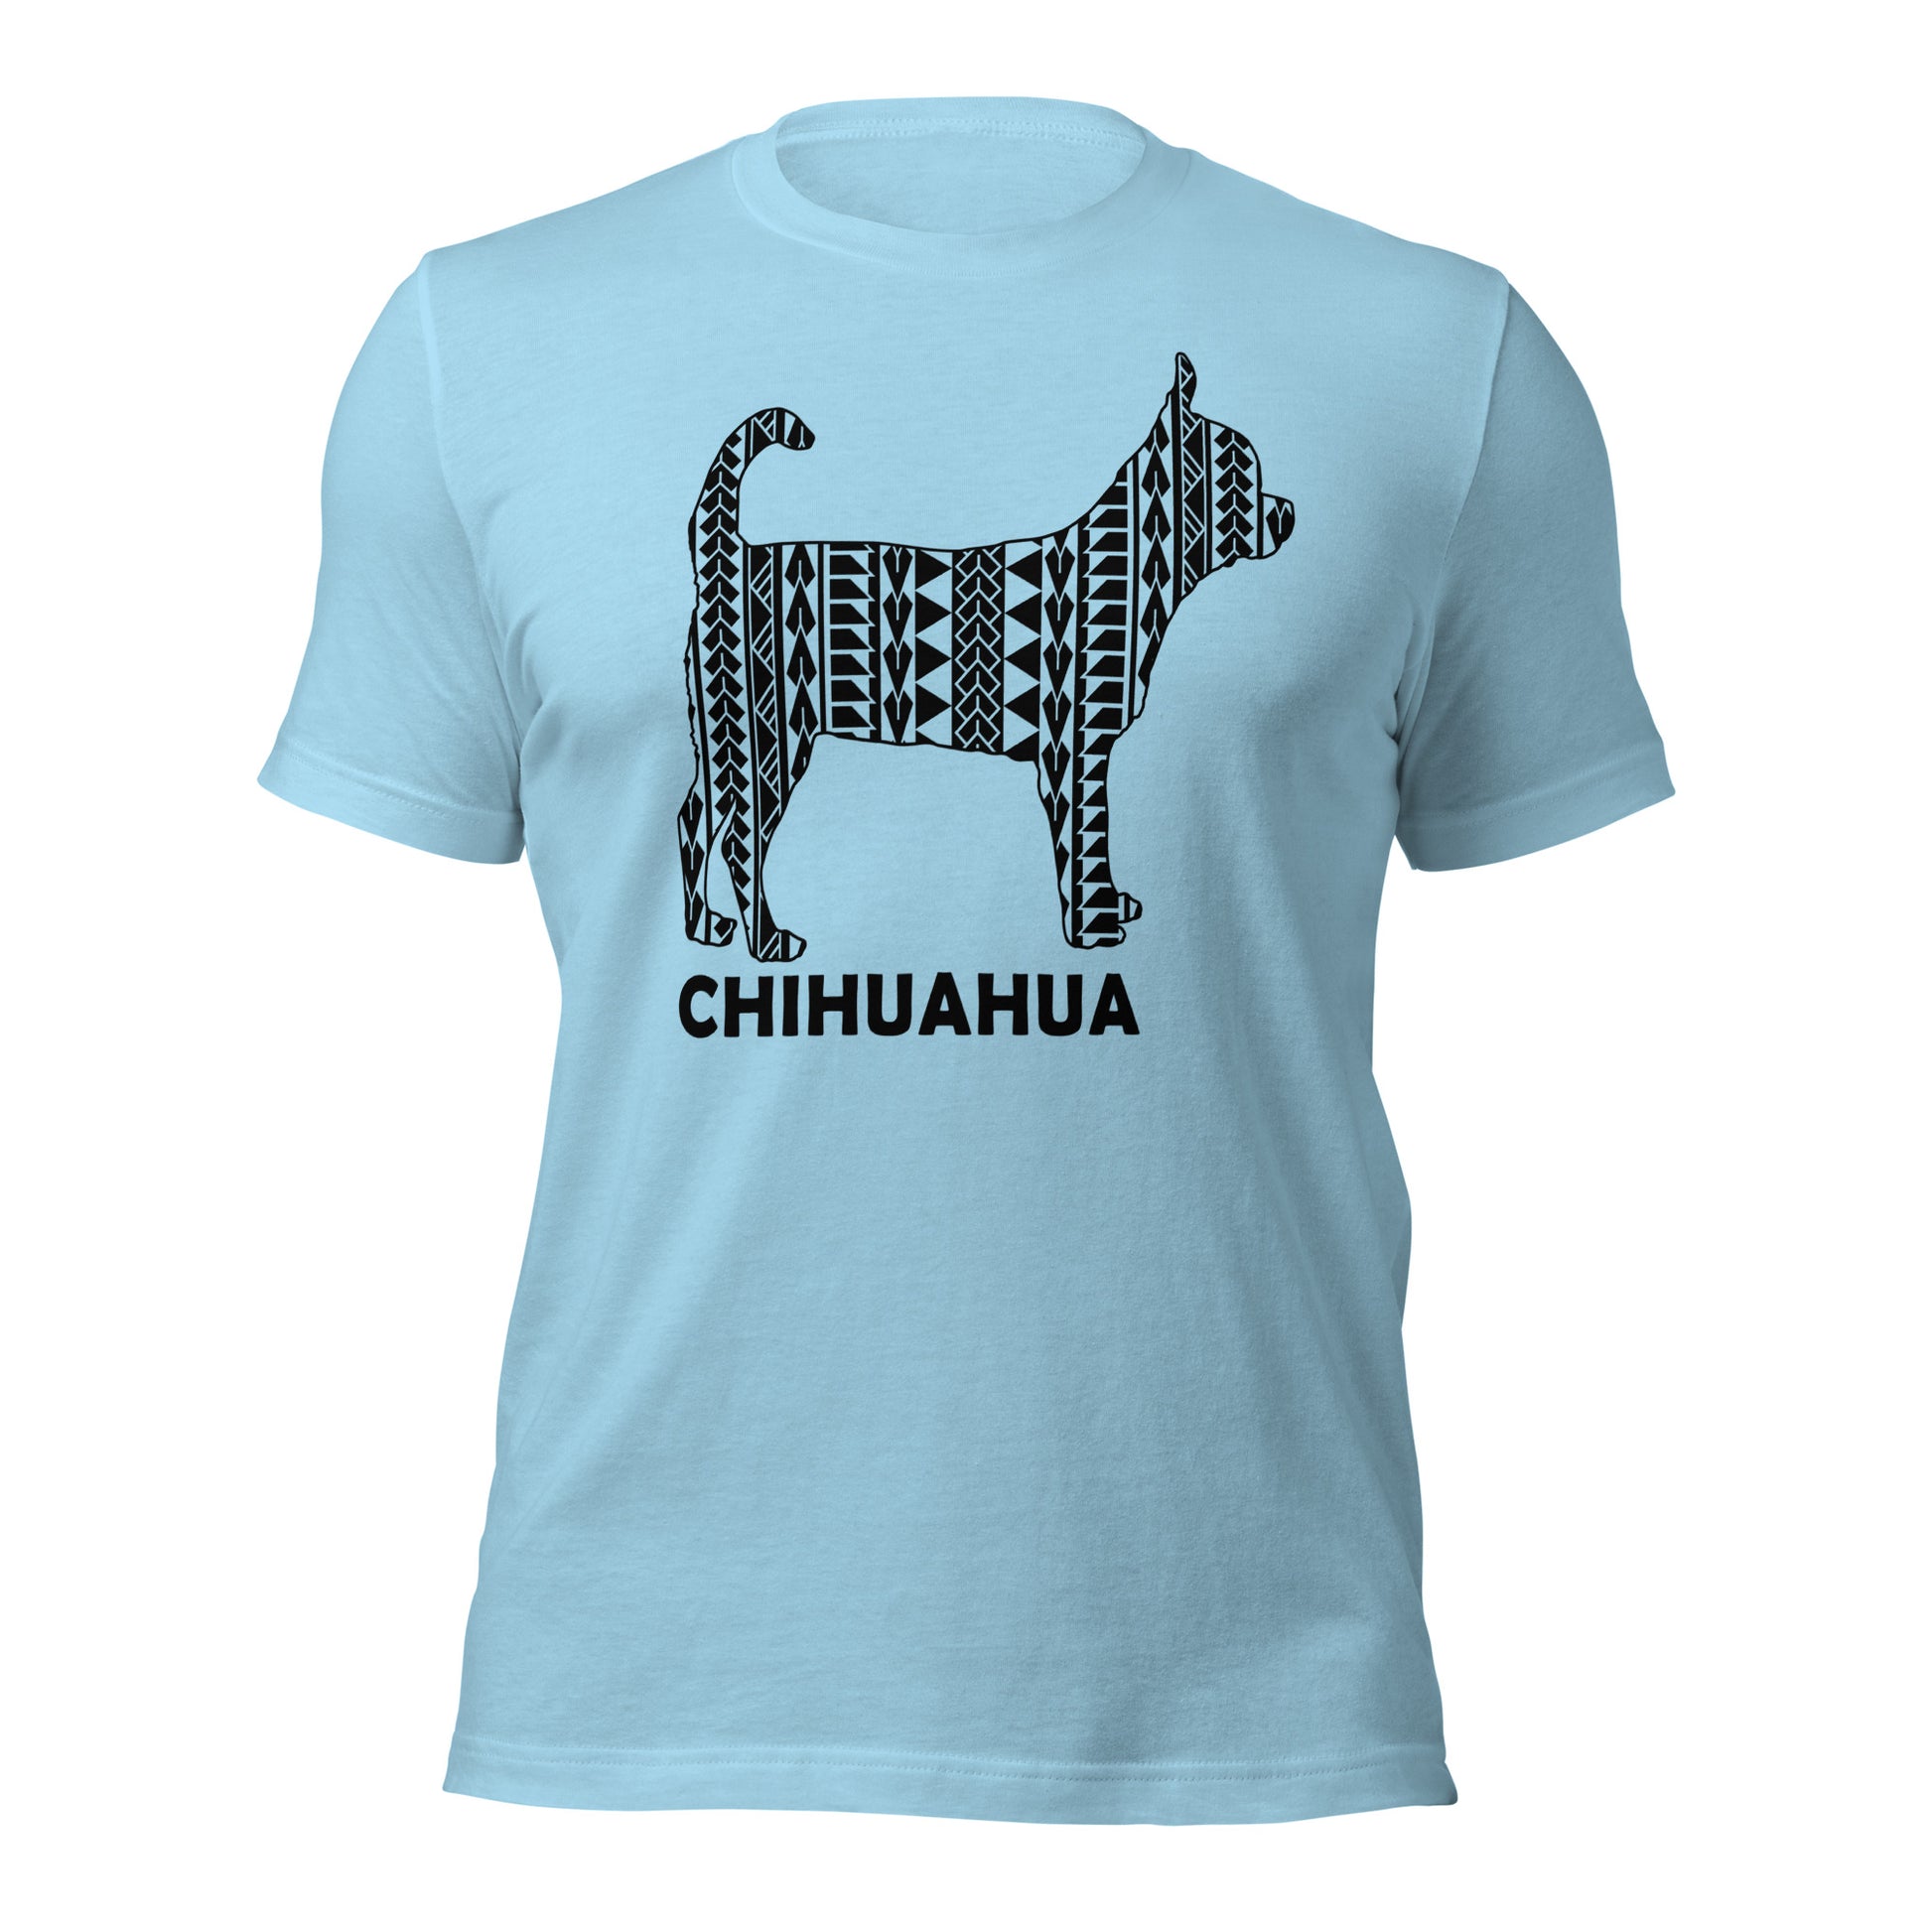 Chihuahua Polynesian t-shirt blue by Dog Artistry.